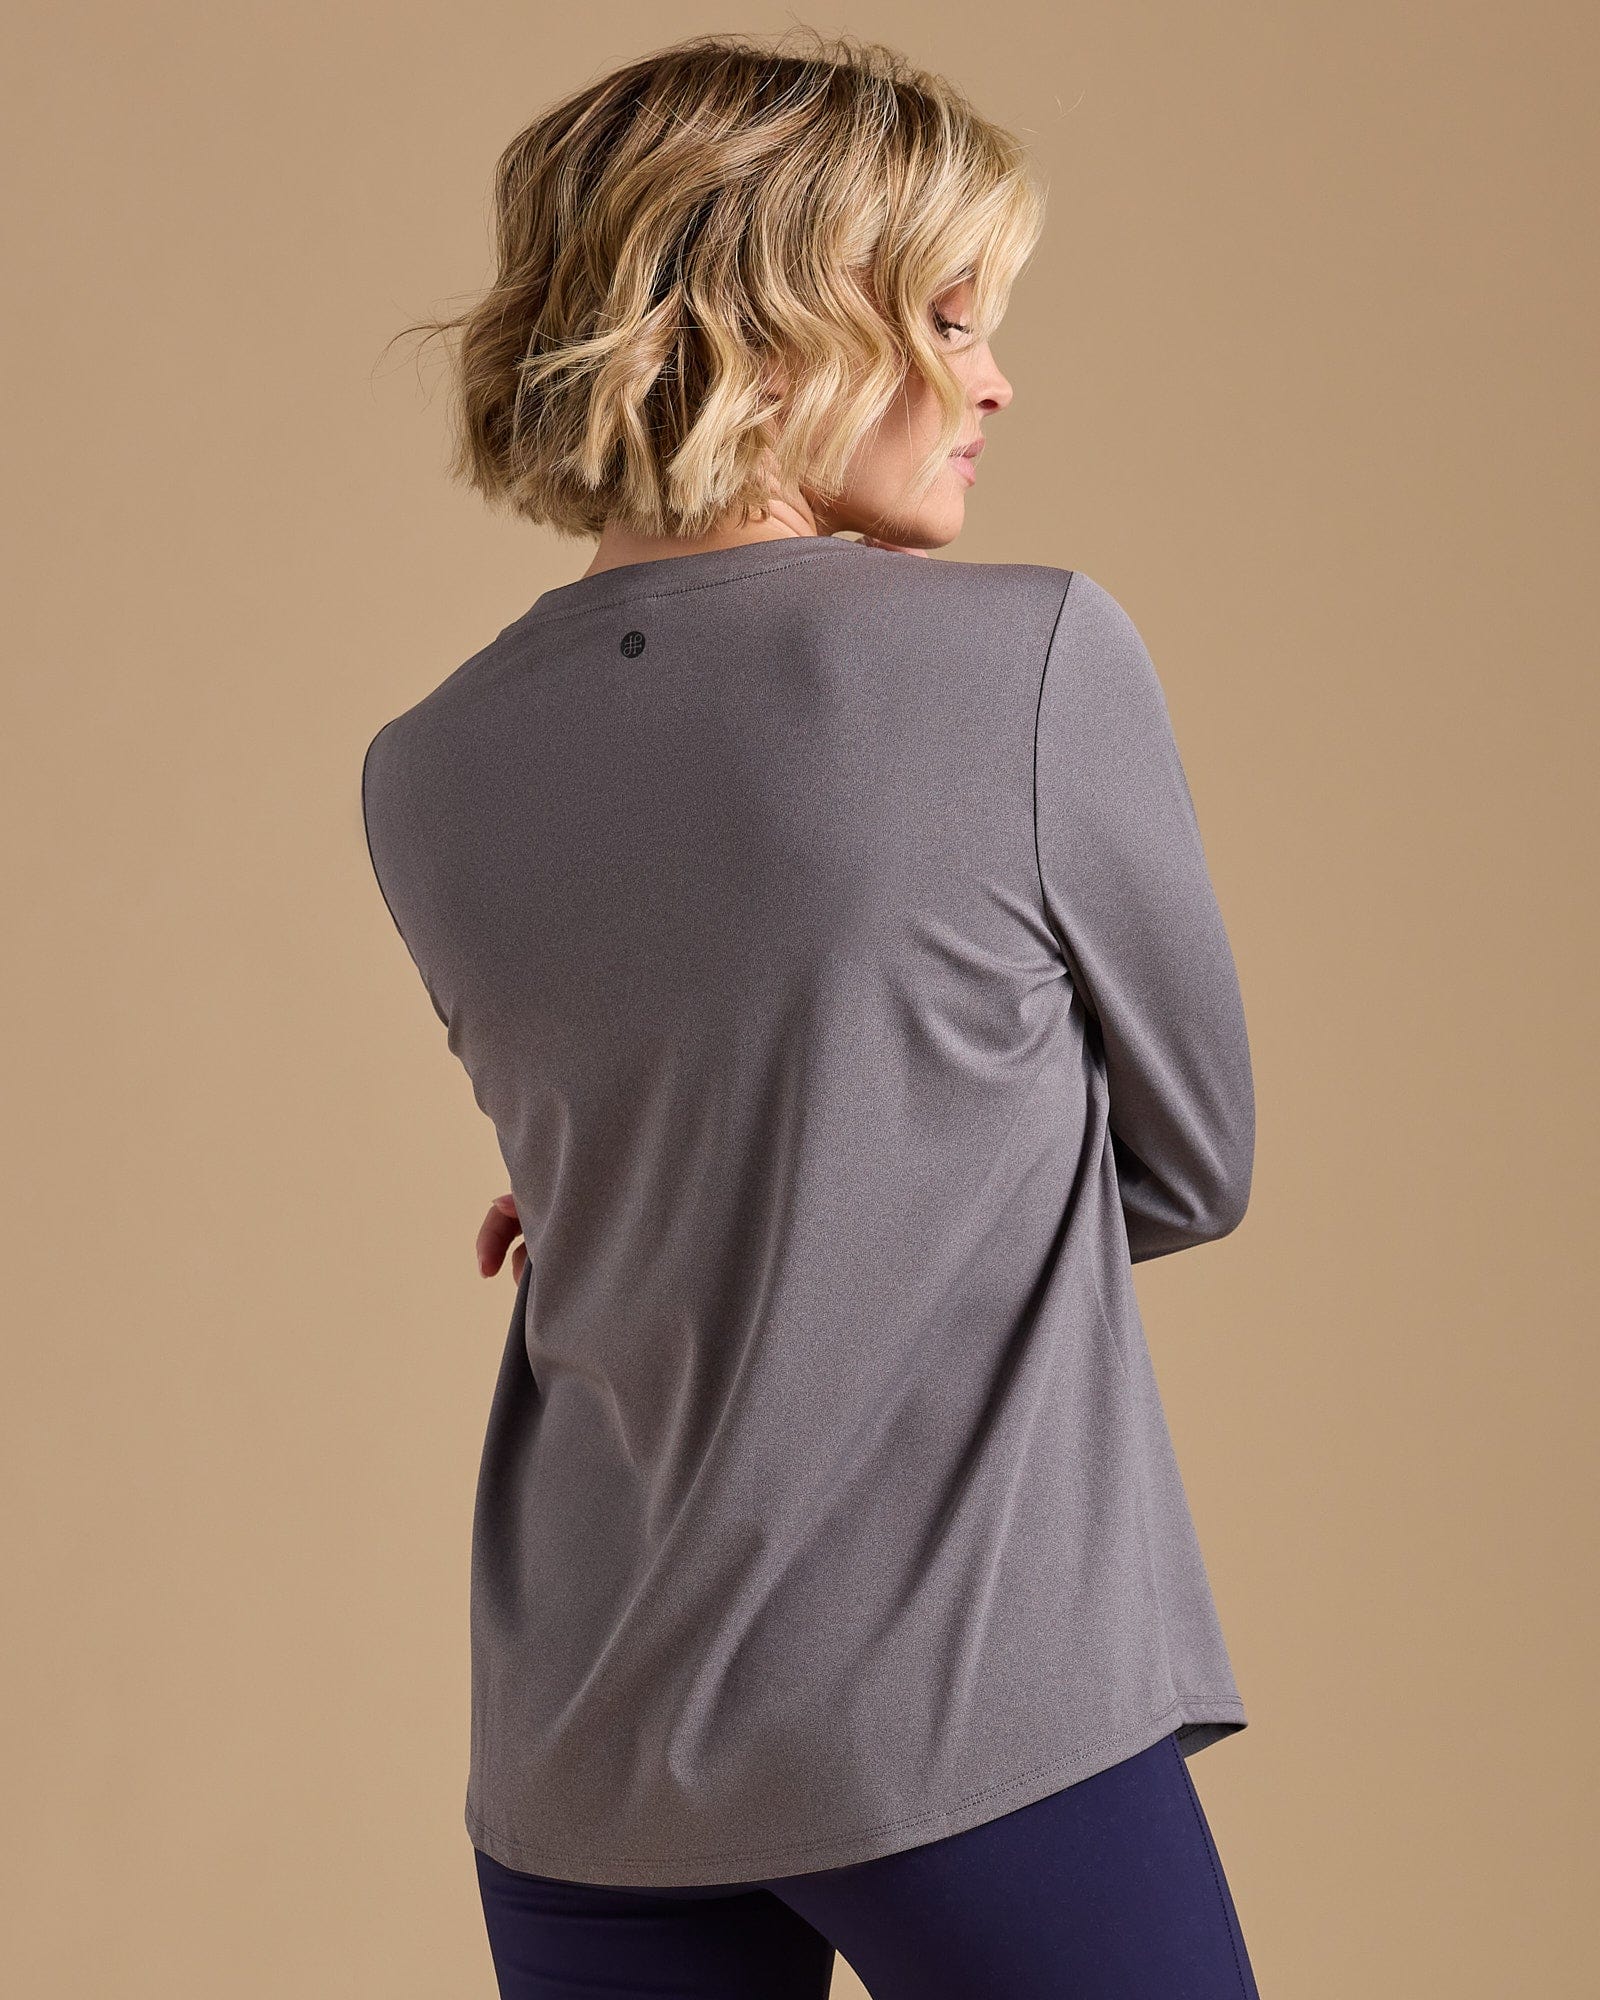 Woman in a grey long sleeve tshirt